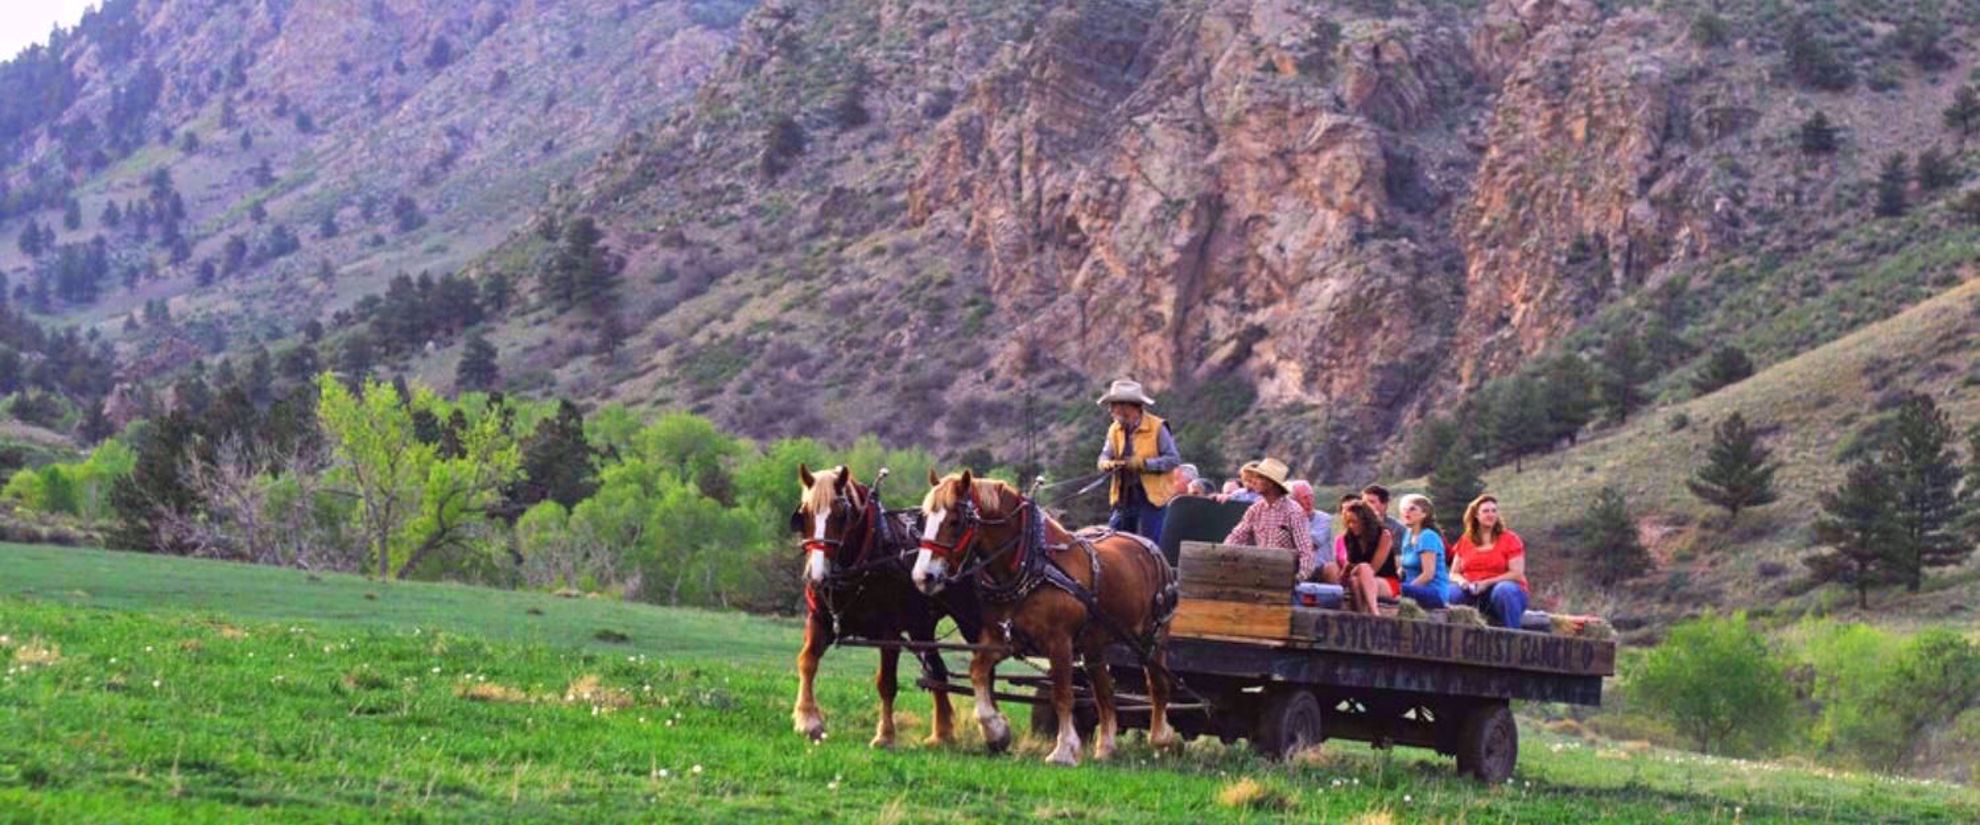 women's horse trip at sylvandale guest ranch